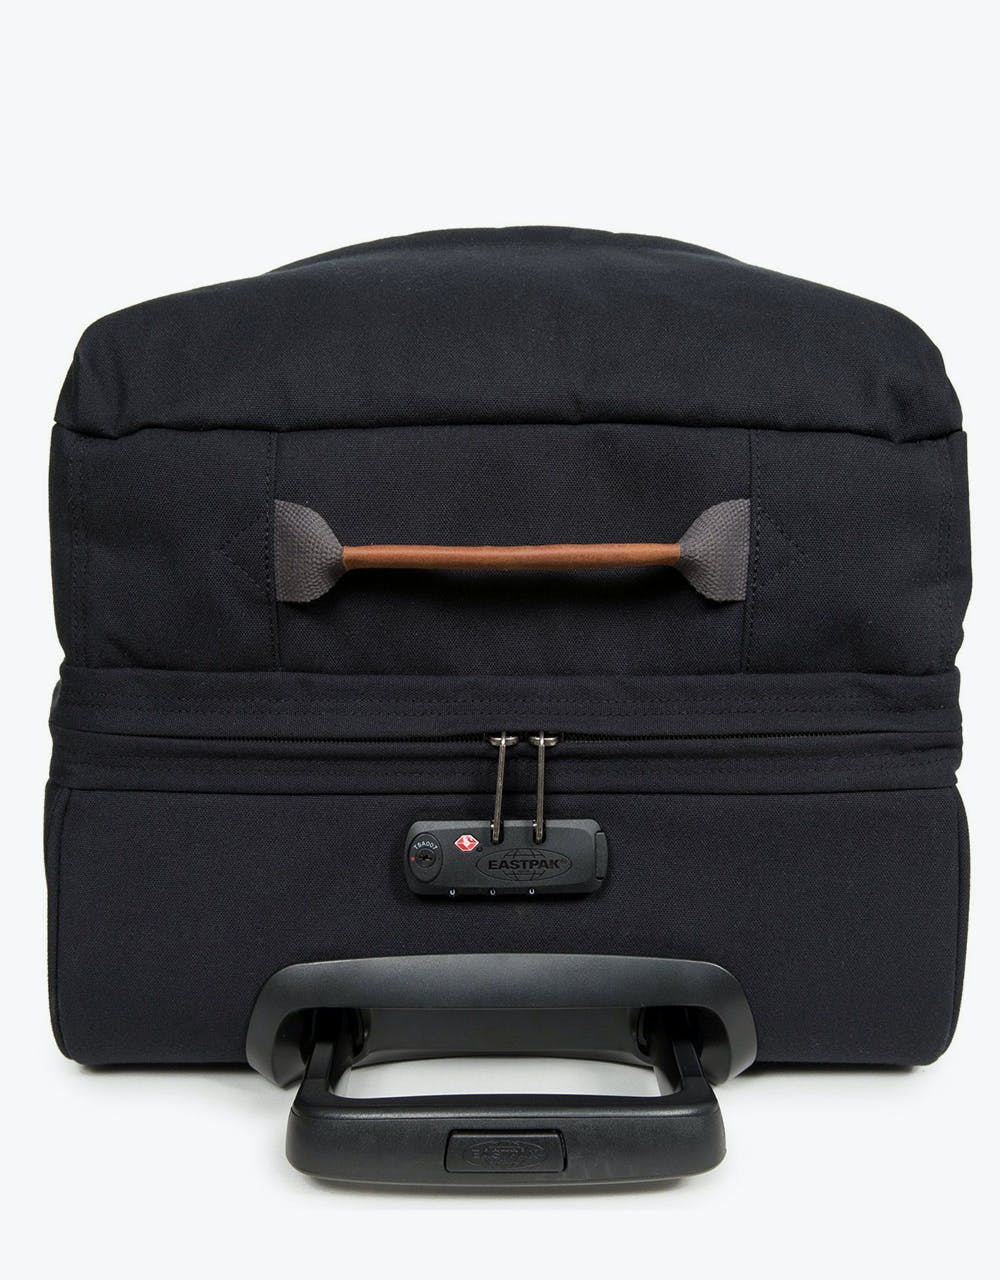 Eastpak Tranzverz Medium Wheeled Luggage Bag - Opgrade Black